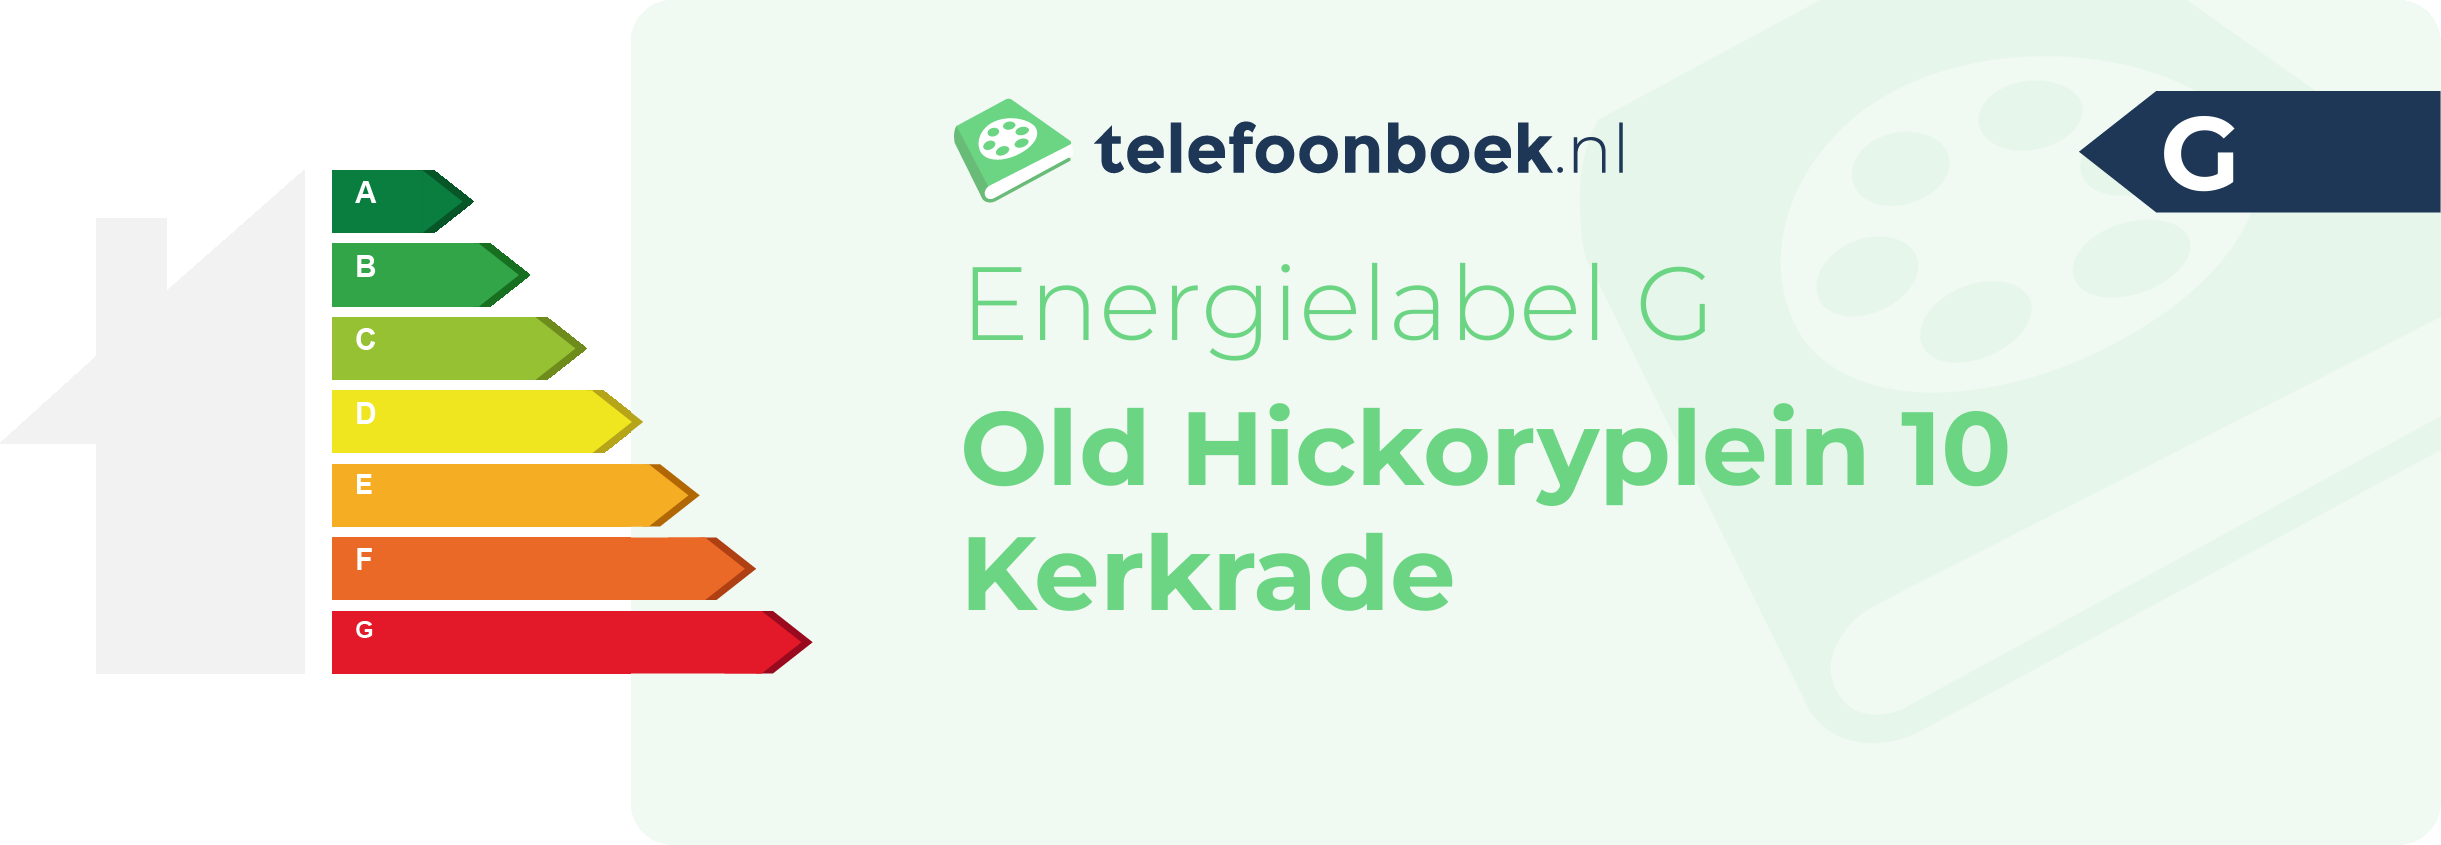 Energielabel Old Hickoryplein 10 Kerkrade